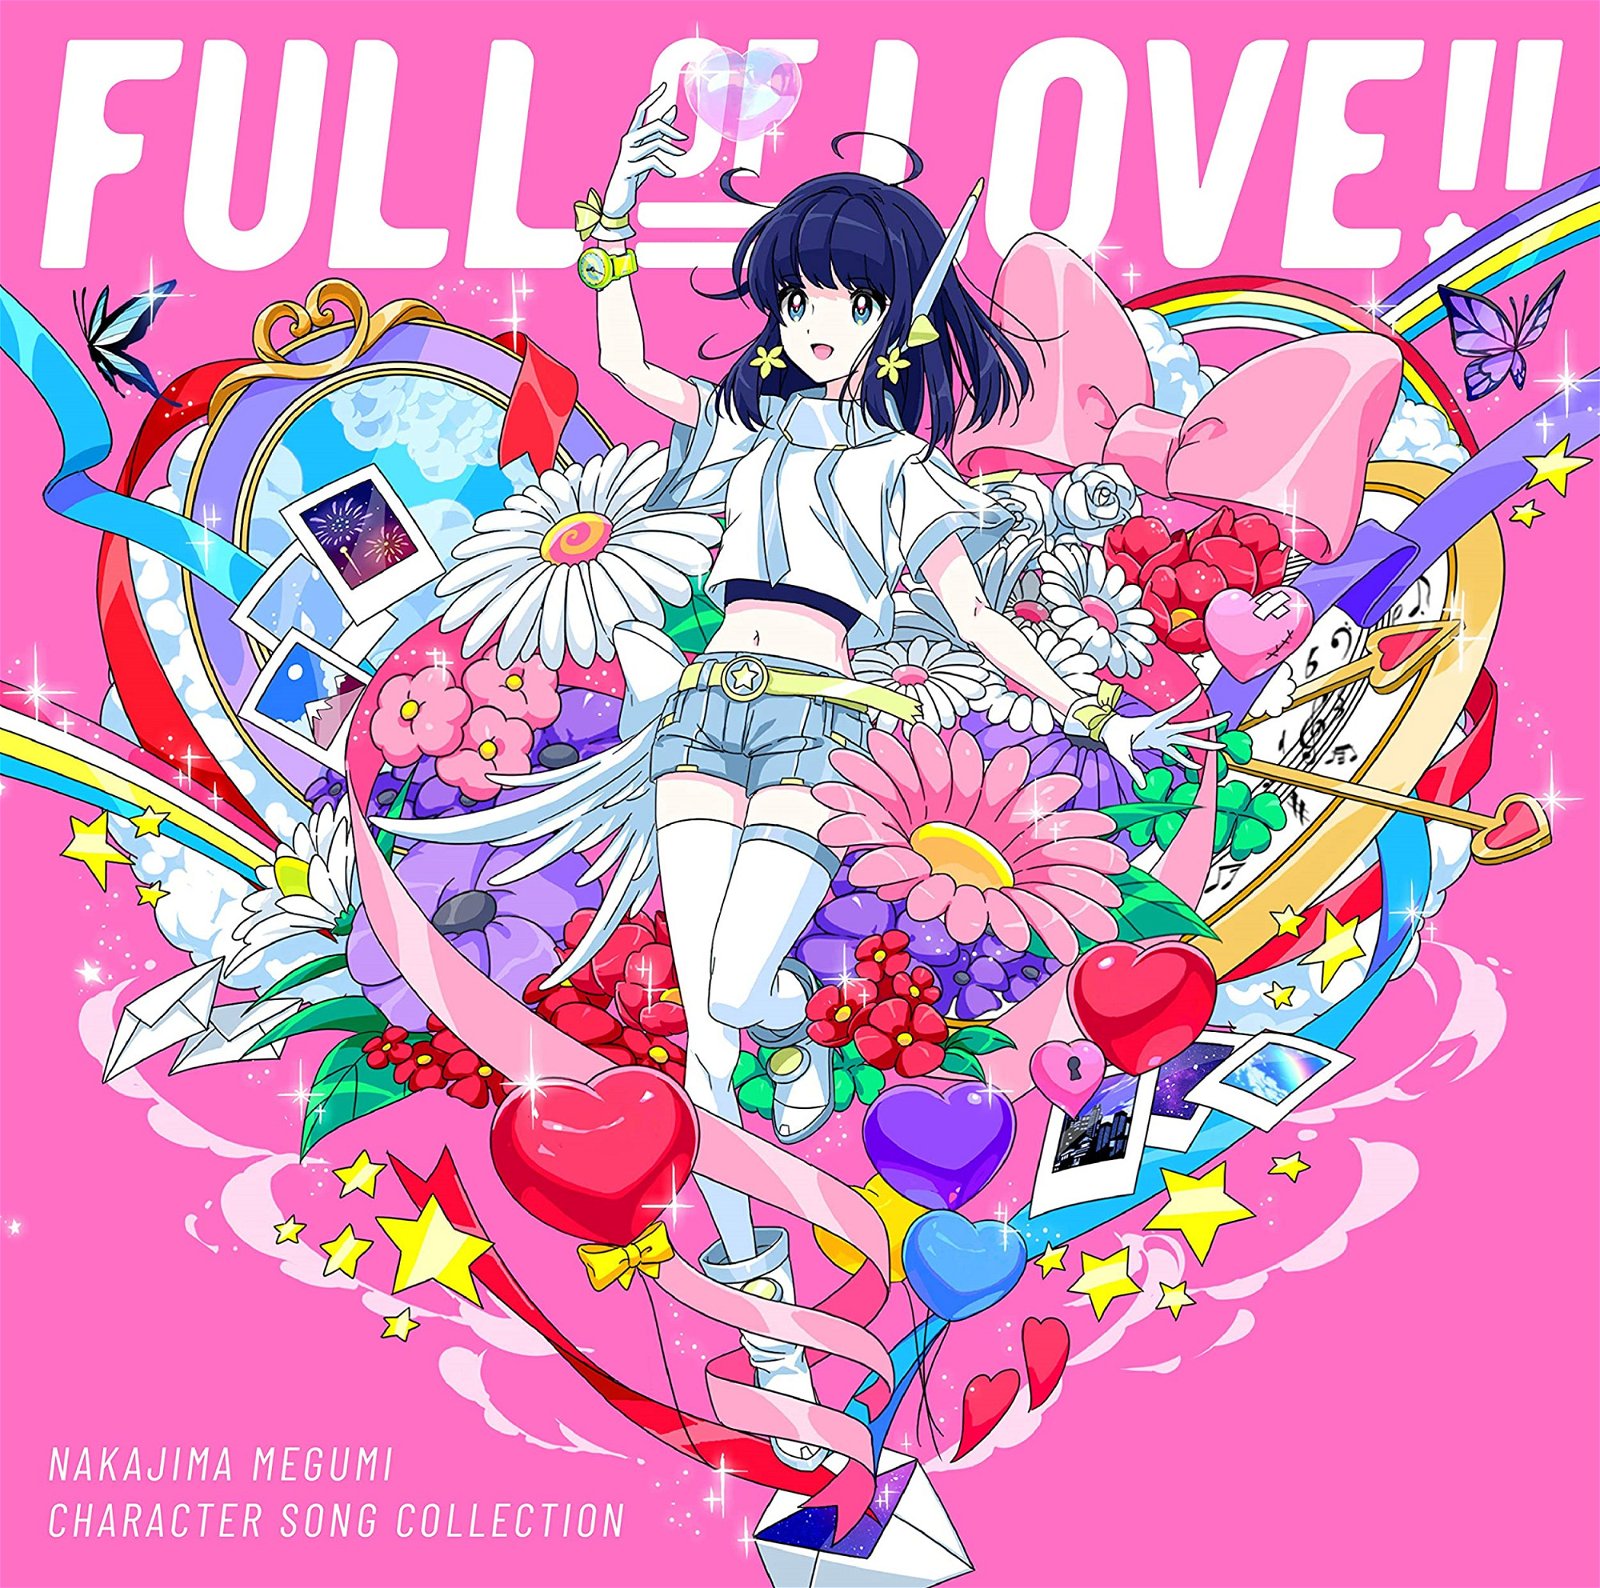 CD Shop - NAKAJIMA, MEGUMI CHARACTER SONG COLLECTION[FULL OF LOVE!!]